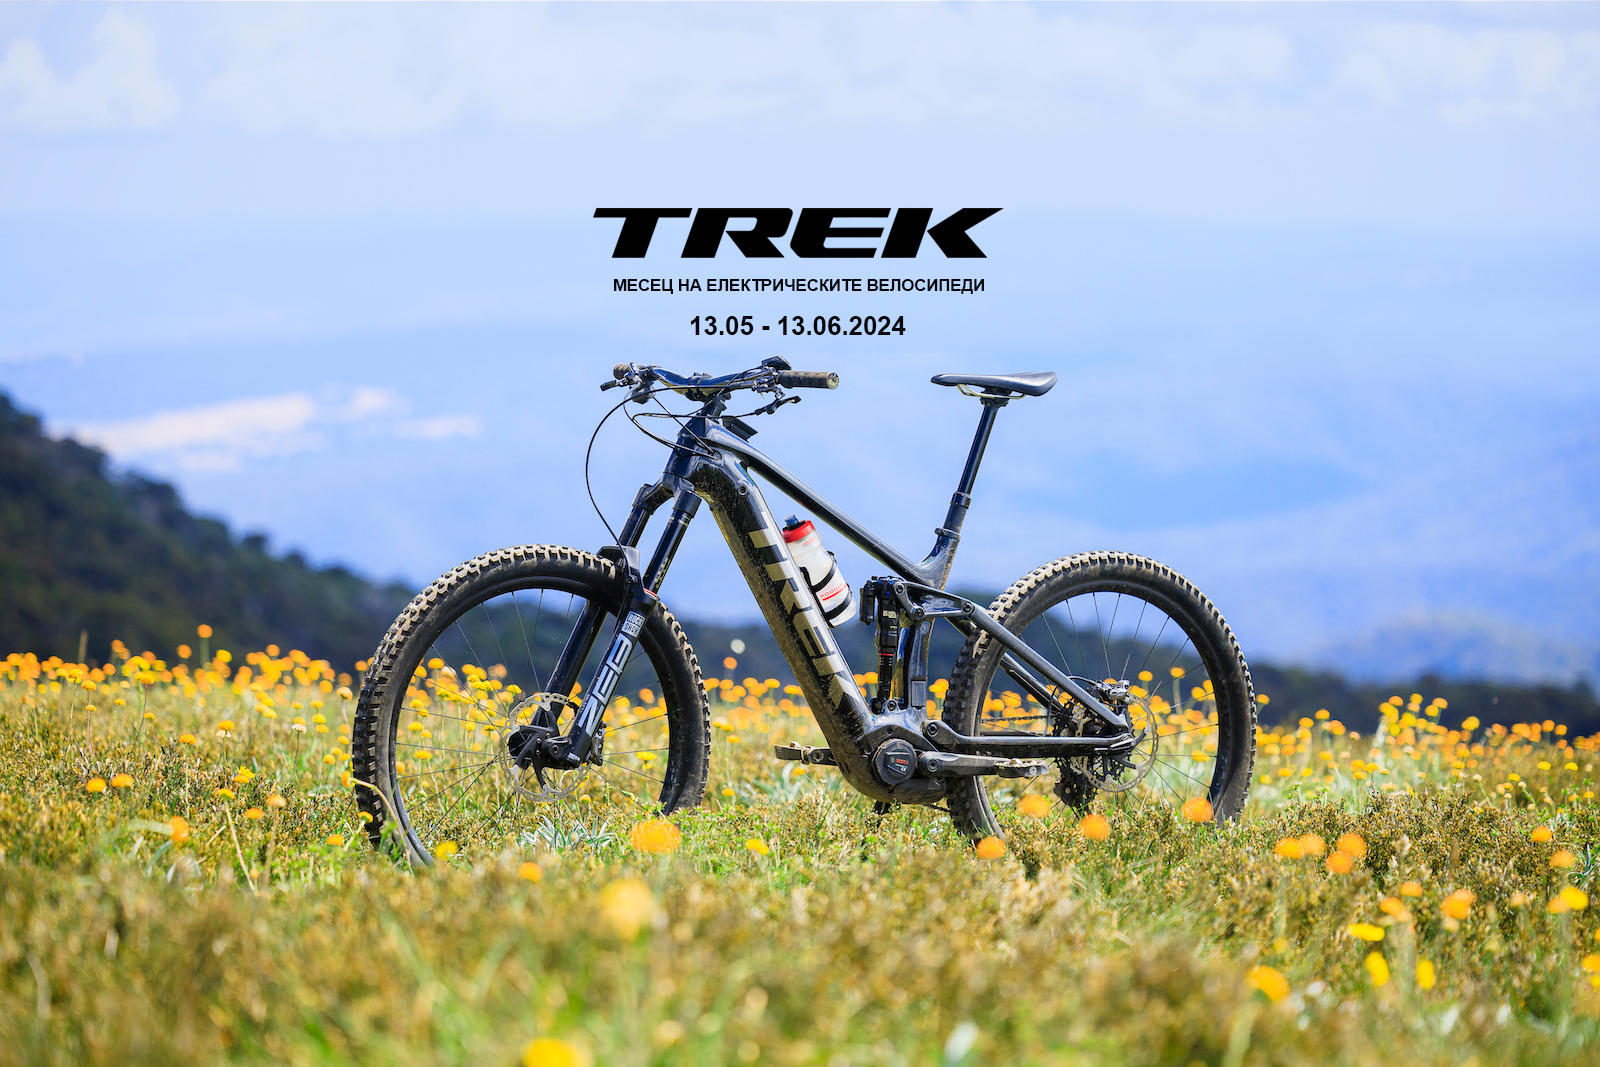 TREK E-Bike mount